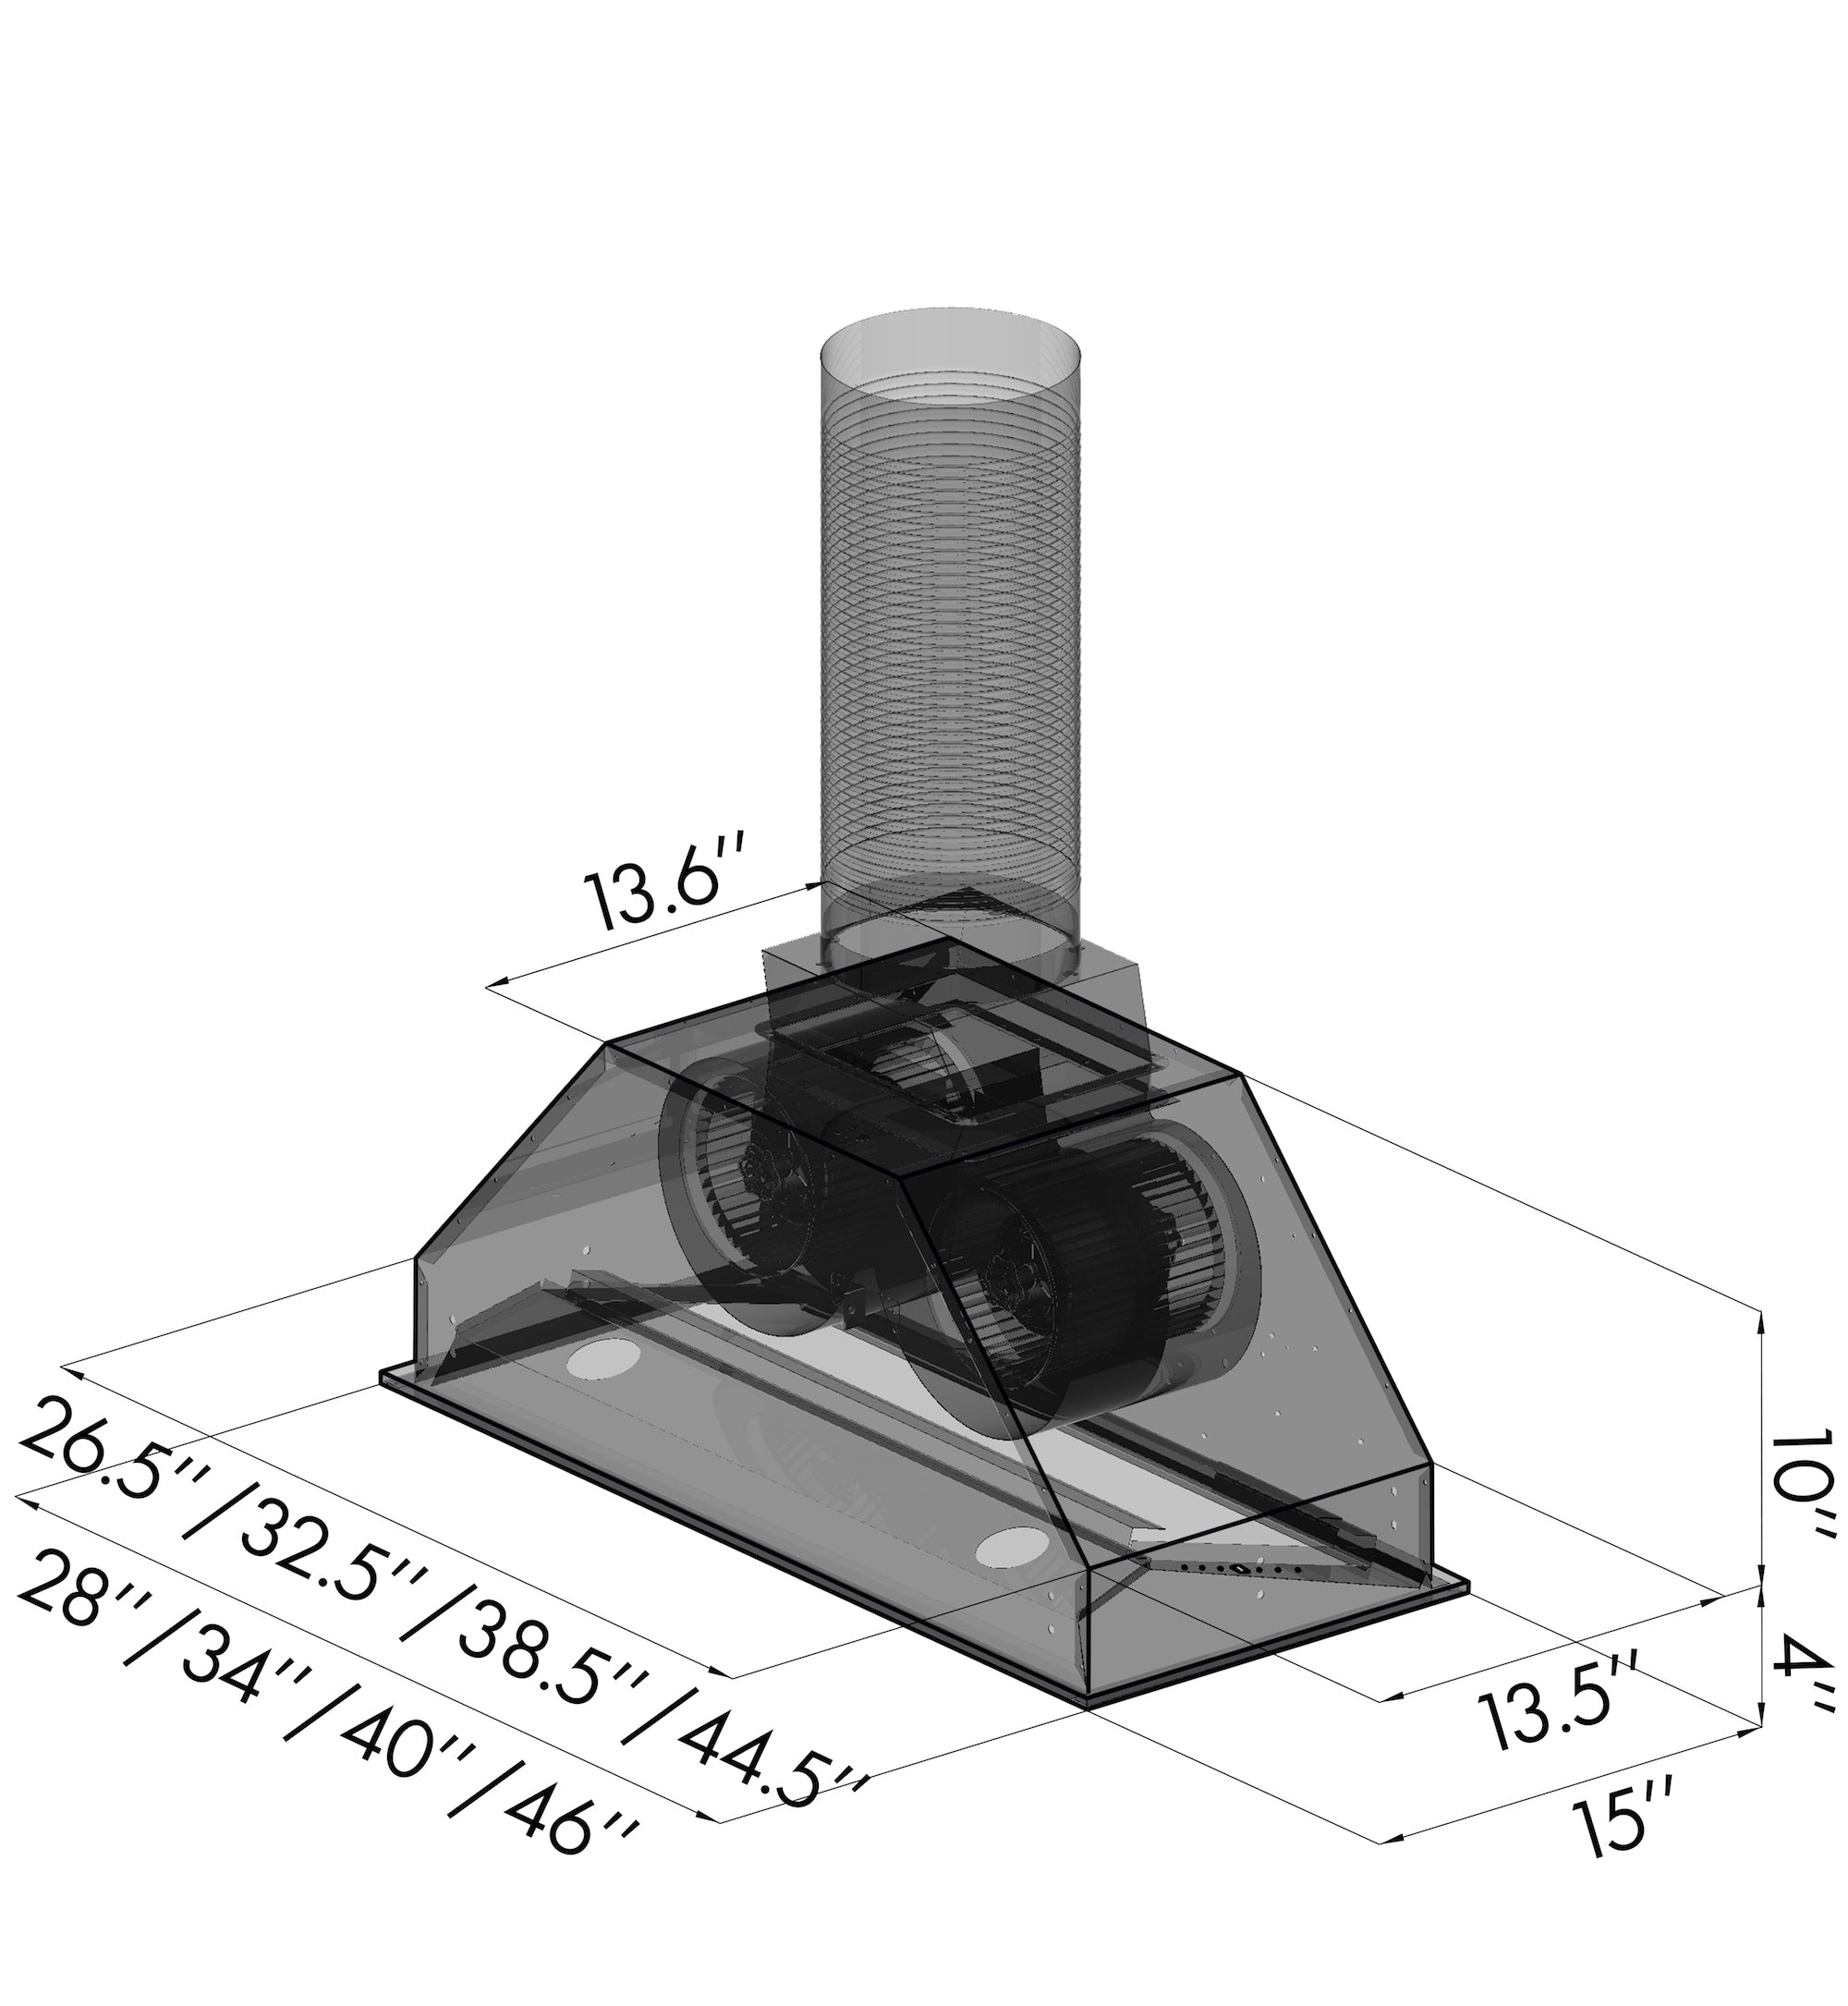 ZLINE 695-28, 695-34, 695-40, and 695-40 dimensional diagram